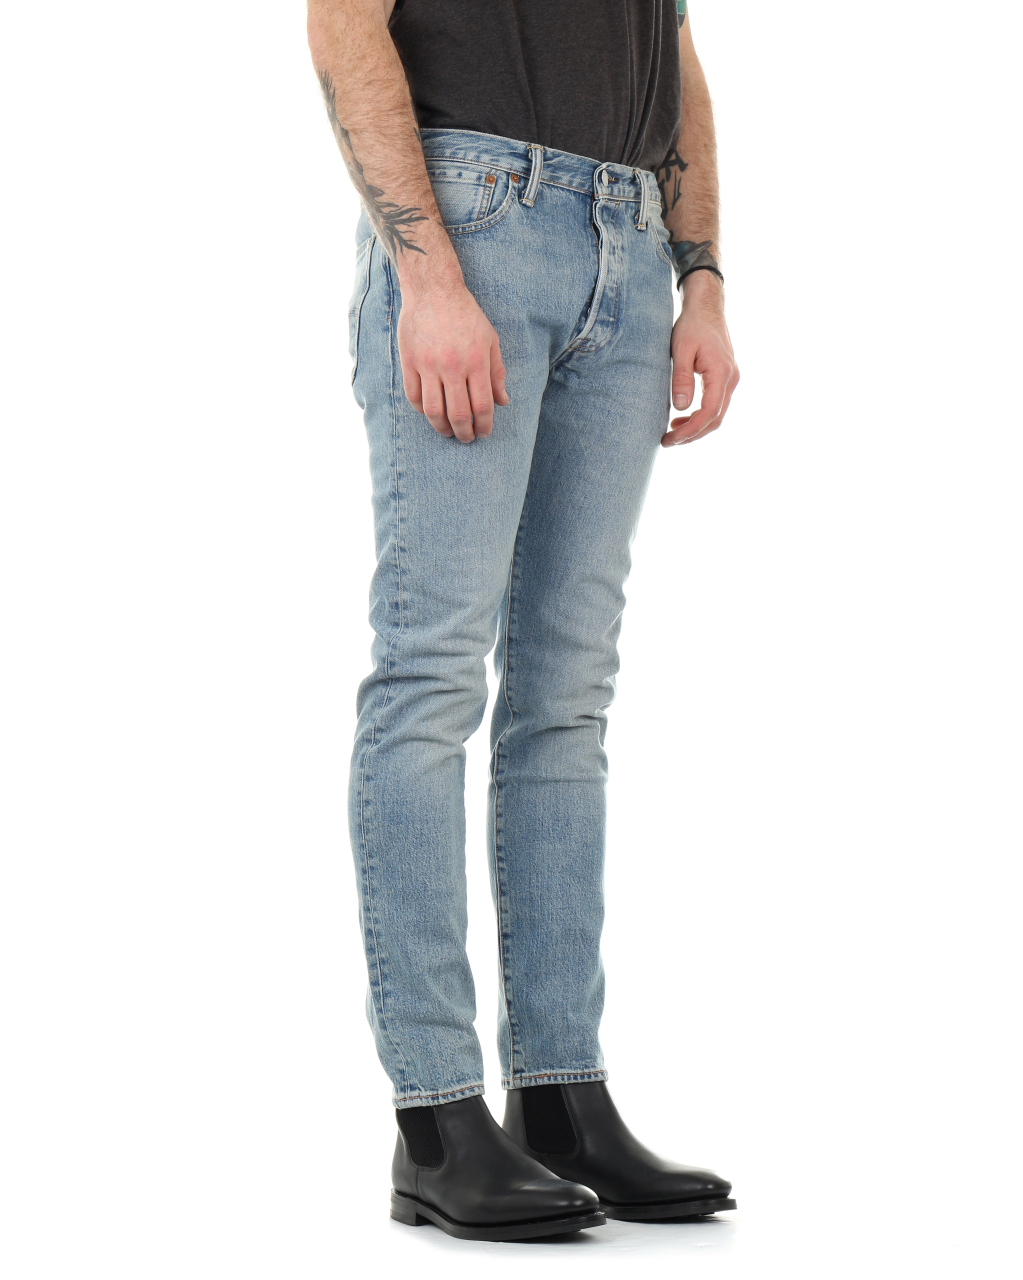 X Levis 501 SKINNY Mens Jeans - Hillman | eBay